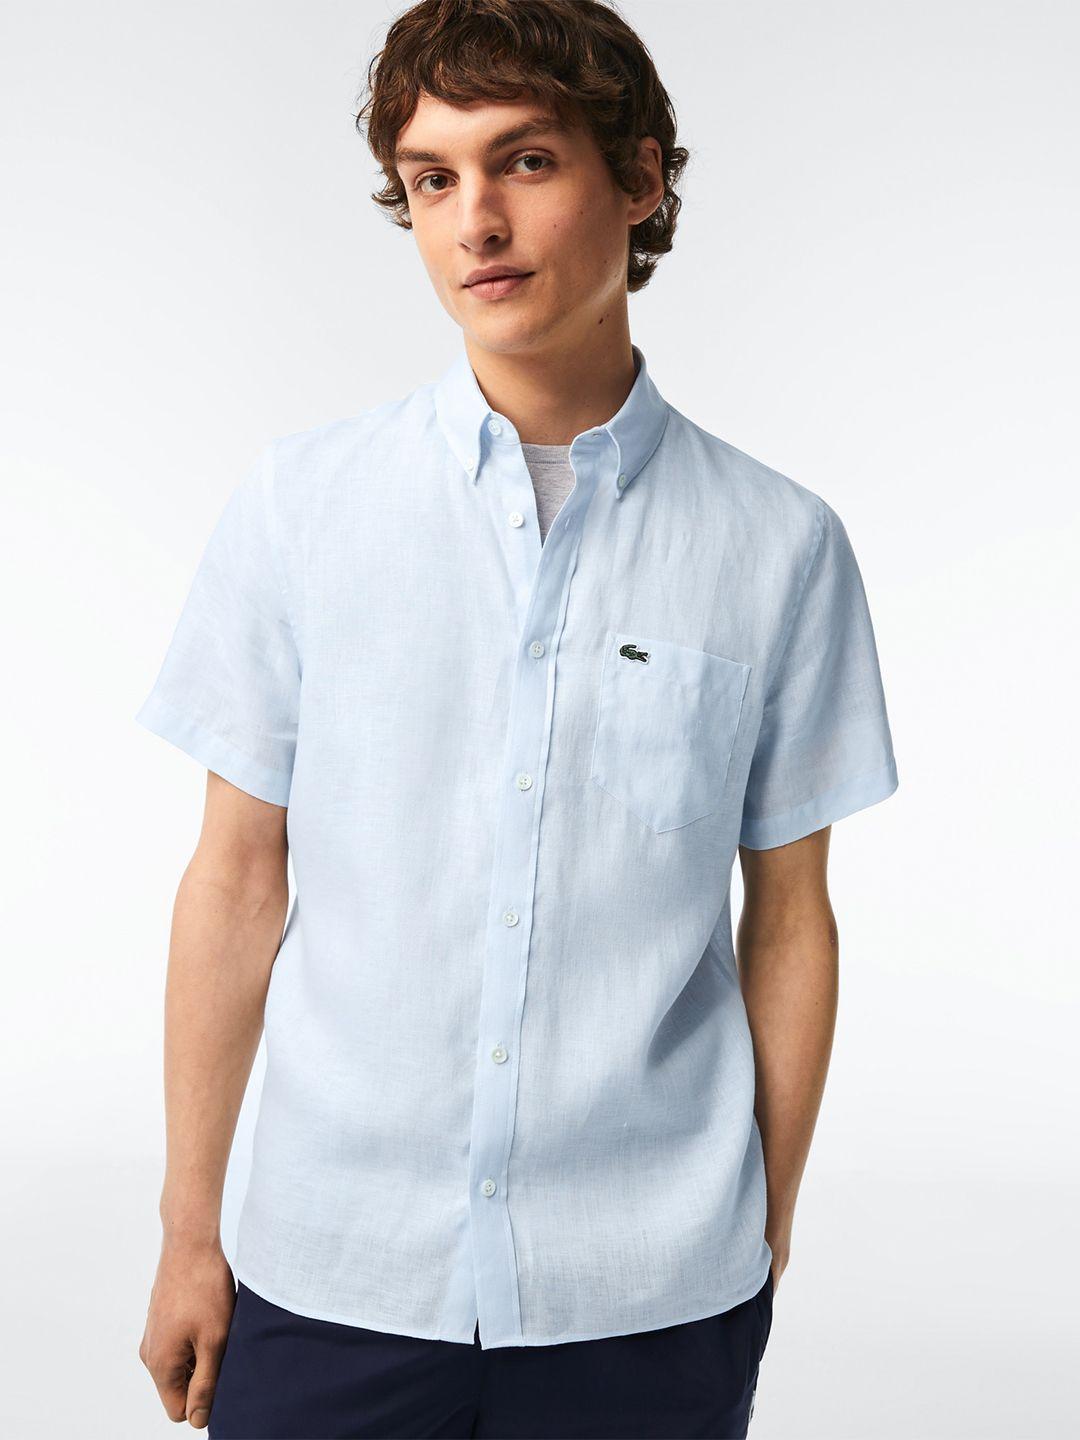 lacoste-modern-casual-pure-linen-shirt